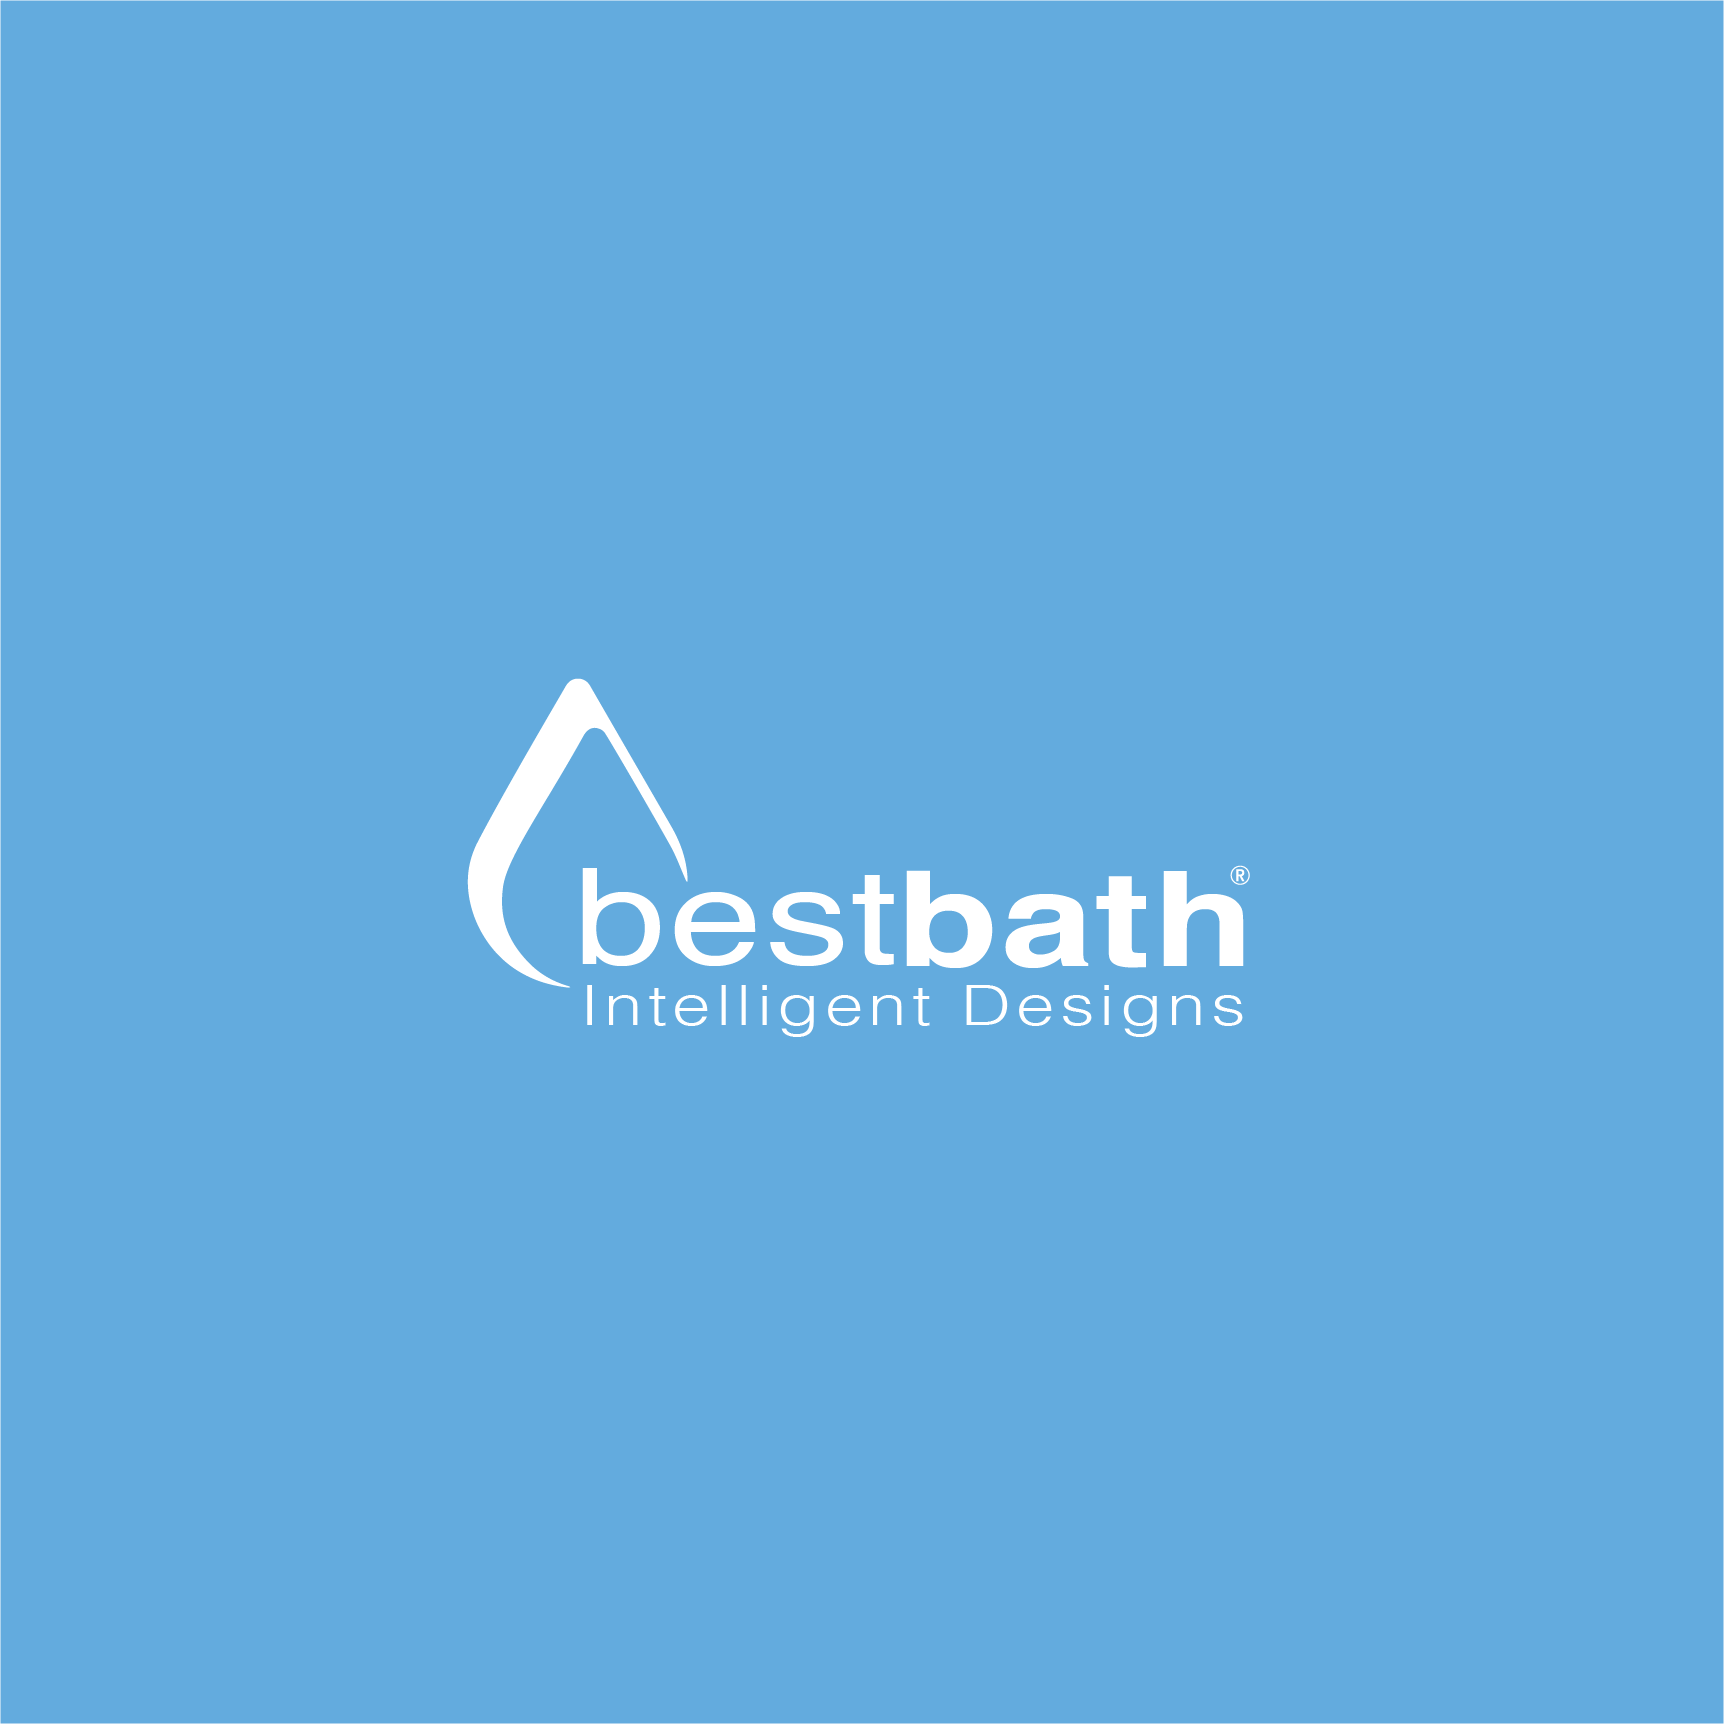 Bestbath Receives Product Innovation Award